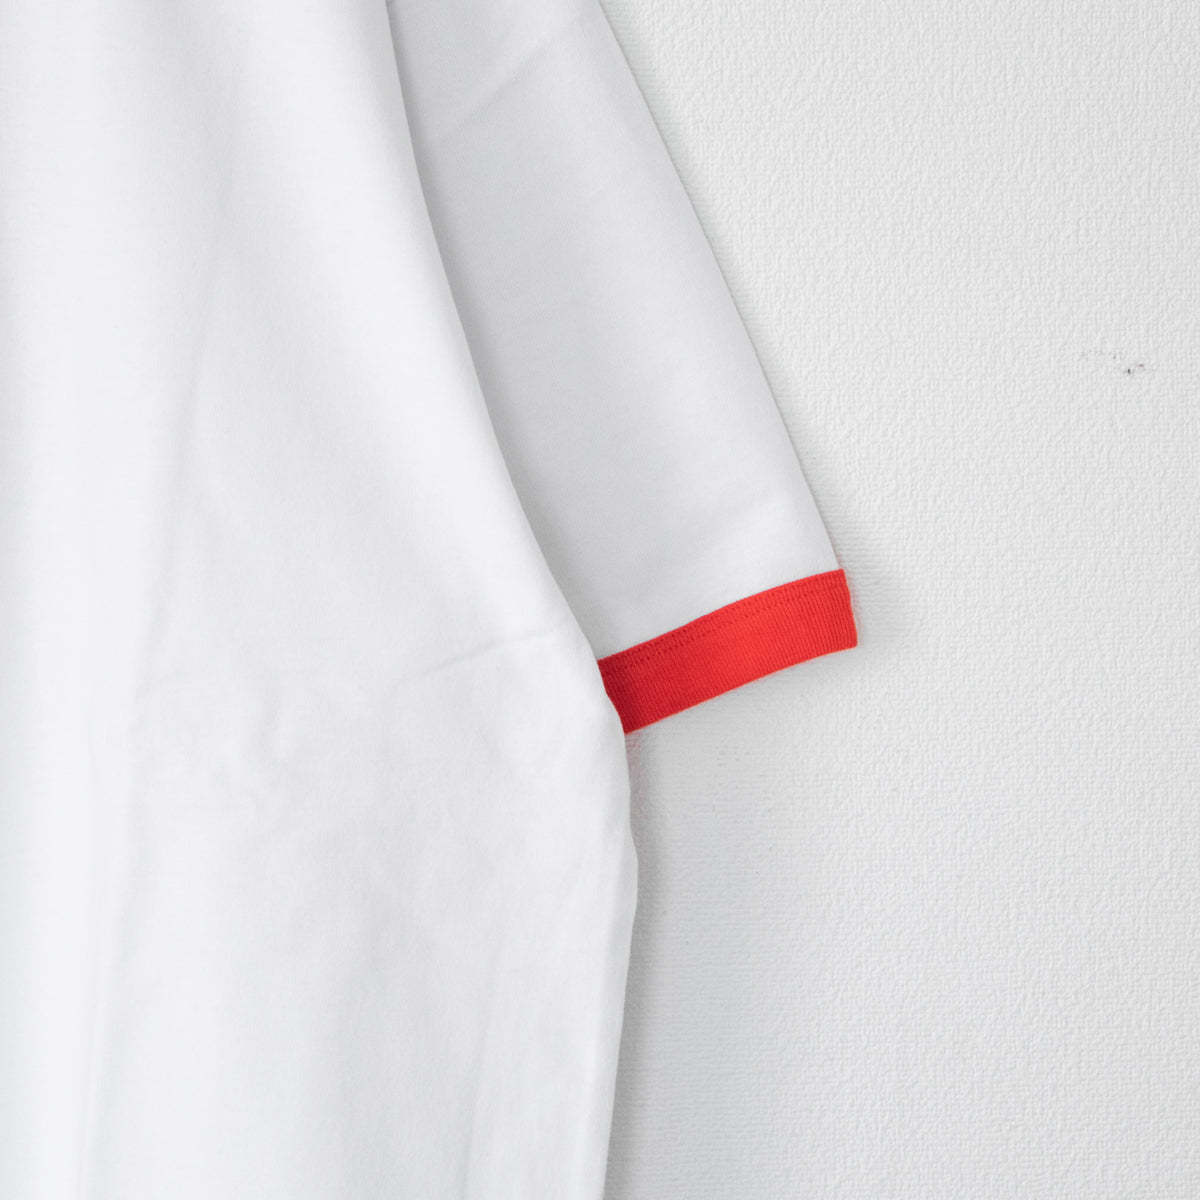 VISION STREET WEAR x HELLO KITTY リンガー スケボーロゴ Tシャツ WHITE RED